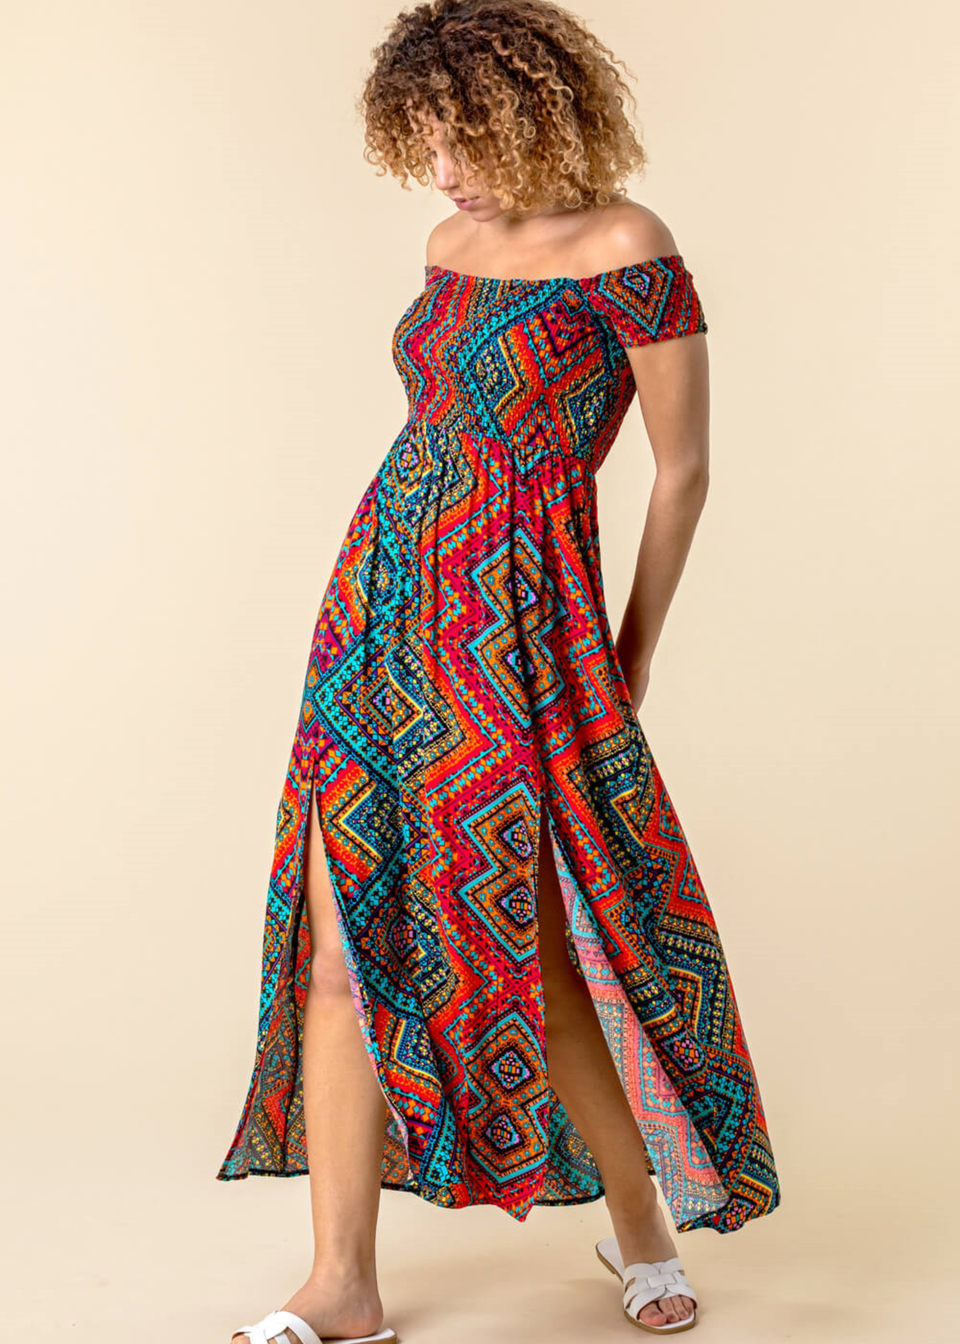 Roman Multi Shirred Aztec Print Bardot Dress